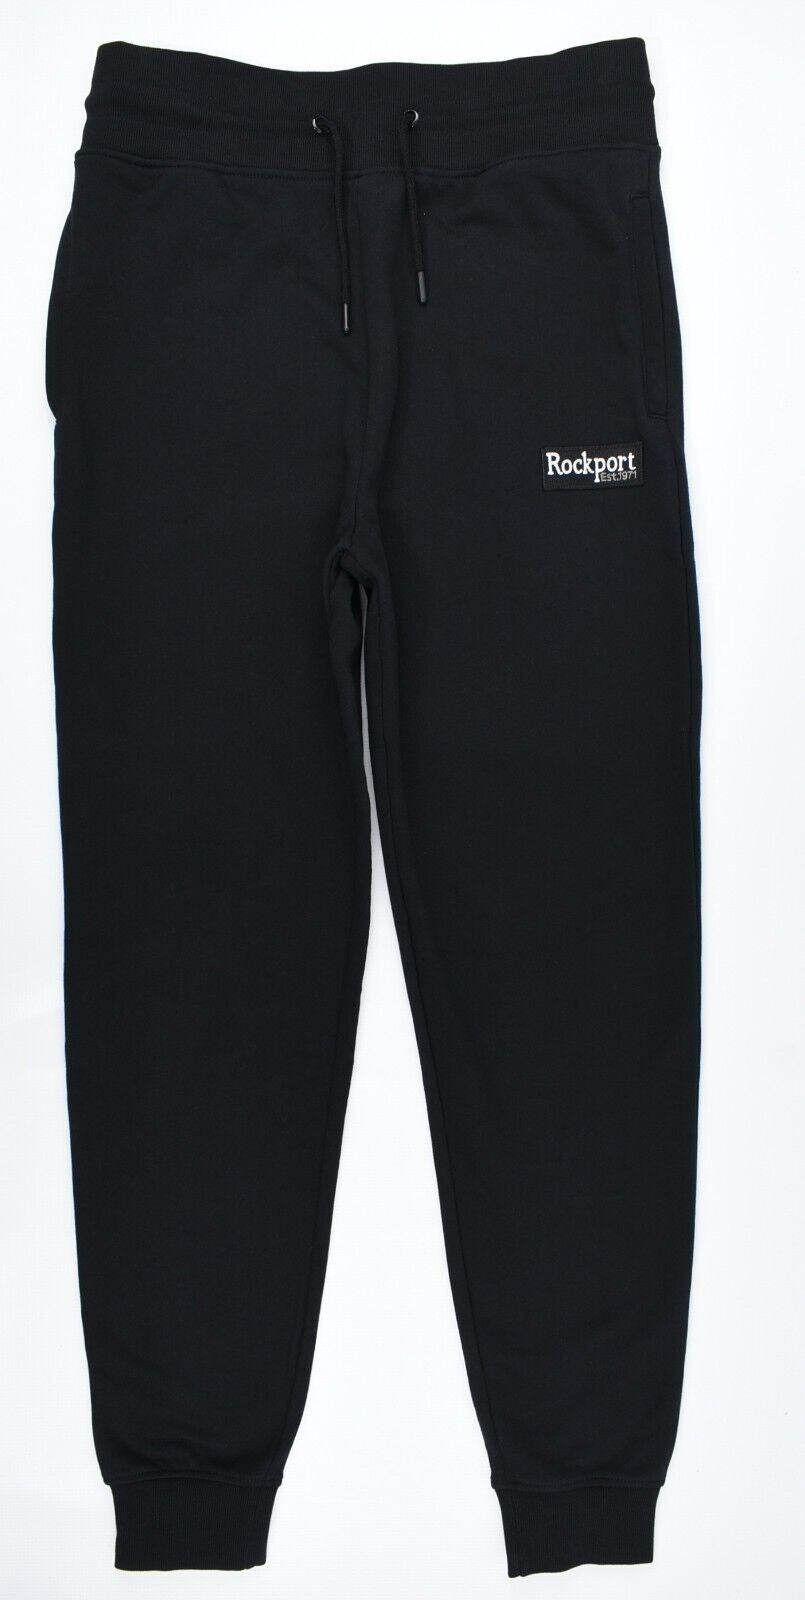 ROCKPORT Men's Cuffed Leg Joggers, 100% Cotton, Black, size LARGE